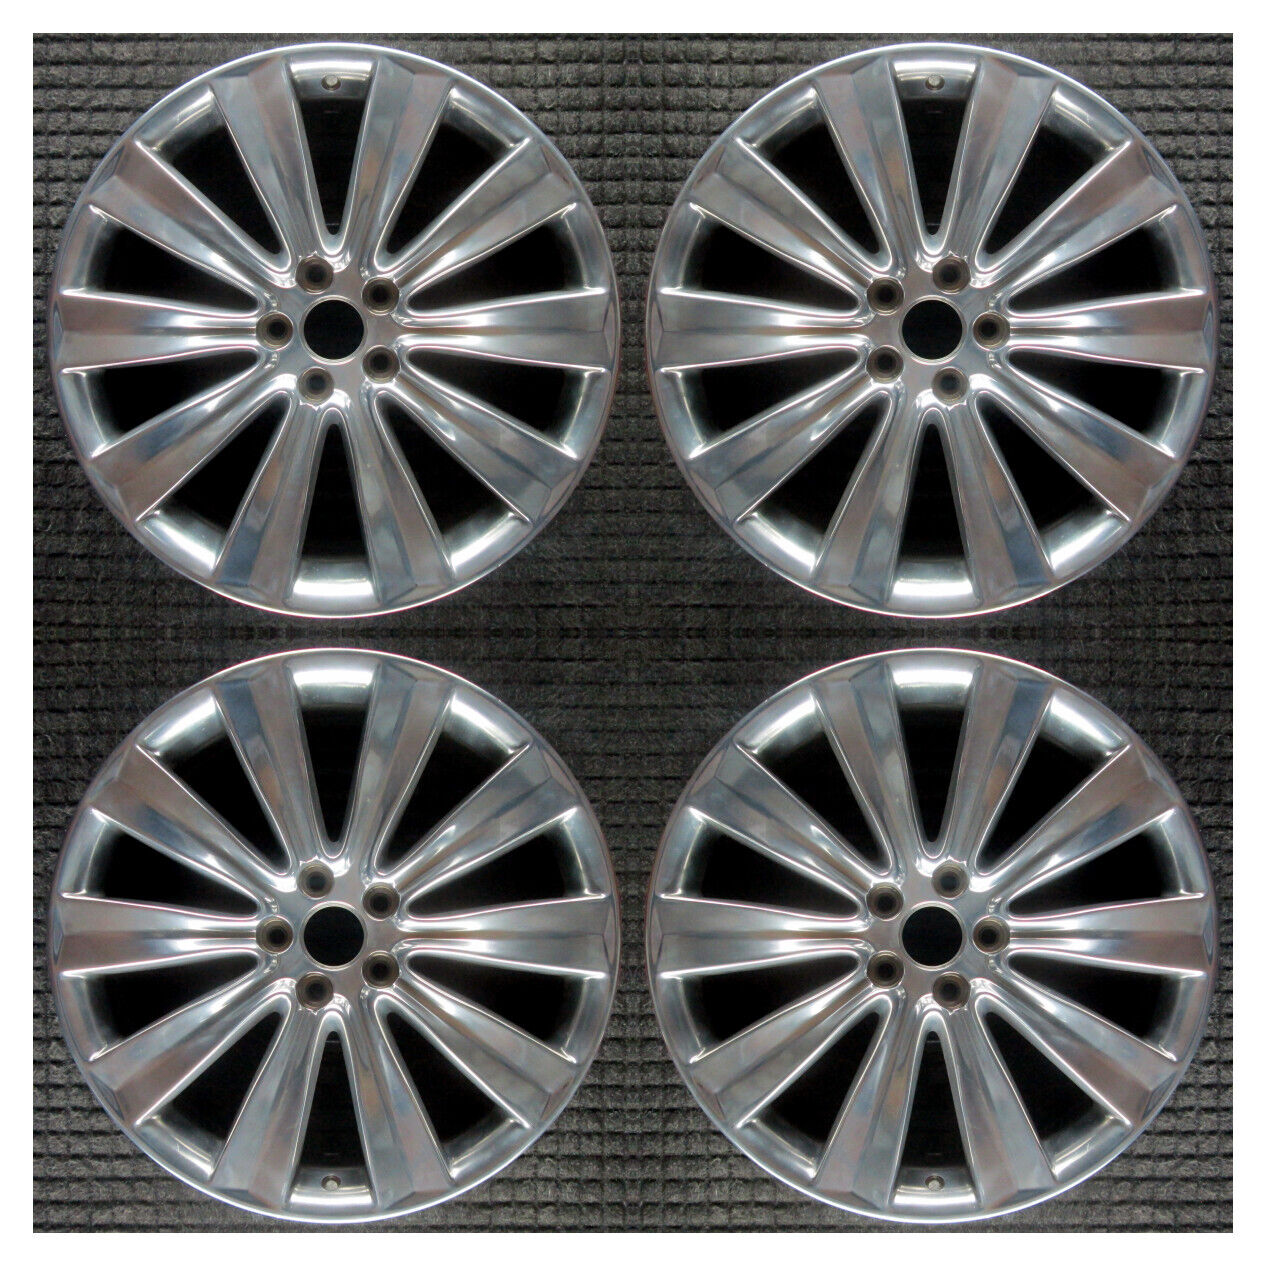 Set 2013 2014 2015 2016 Lincoln MKS MKX OEM Factory Polished Wheels Rims 3930